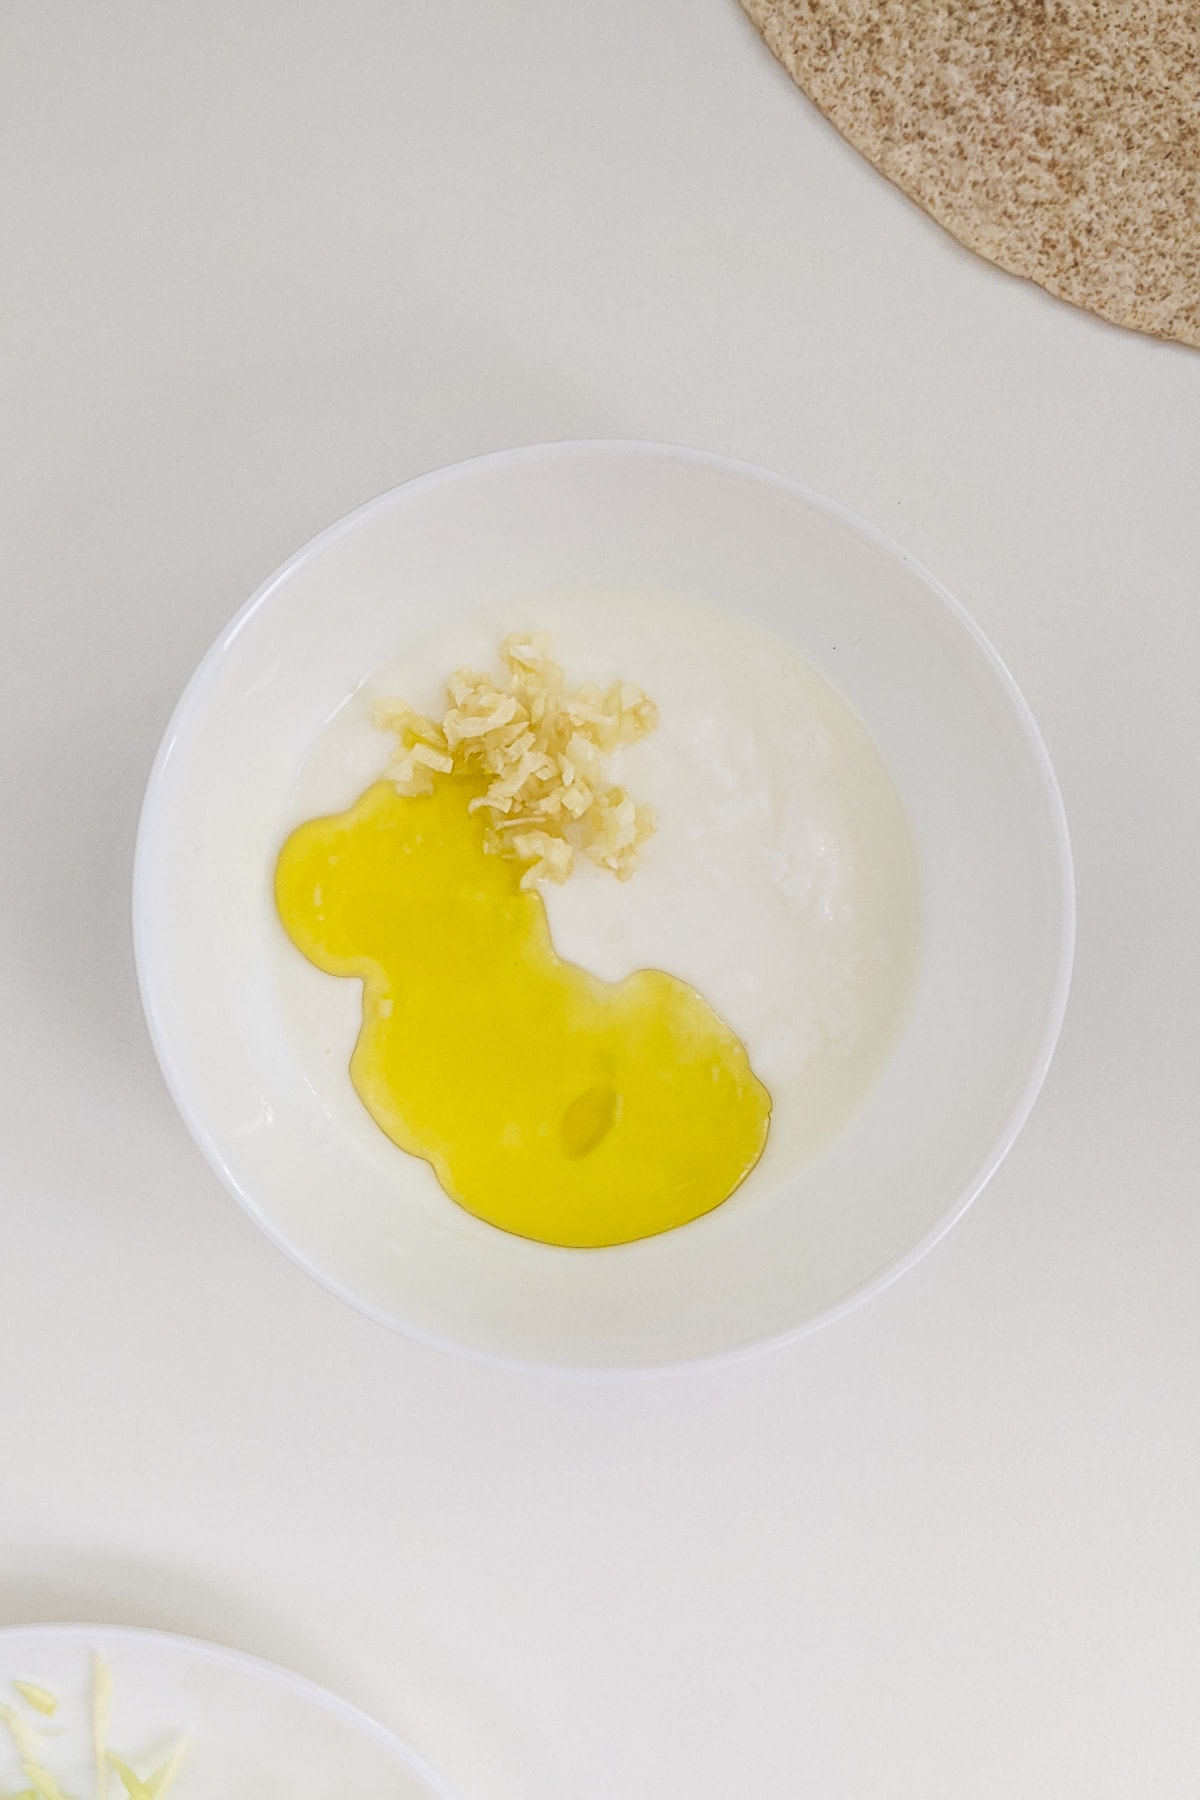 Yogurt, oil and crushed garlic in a white plate.